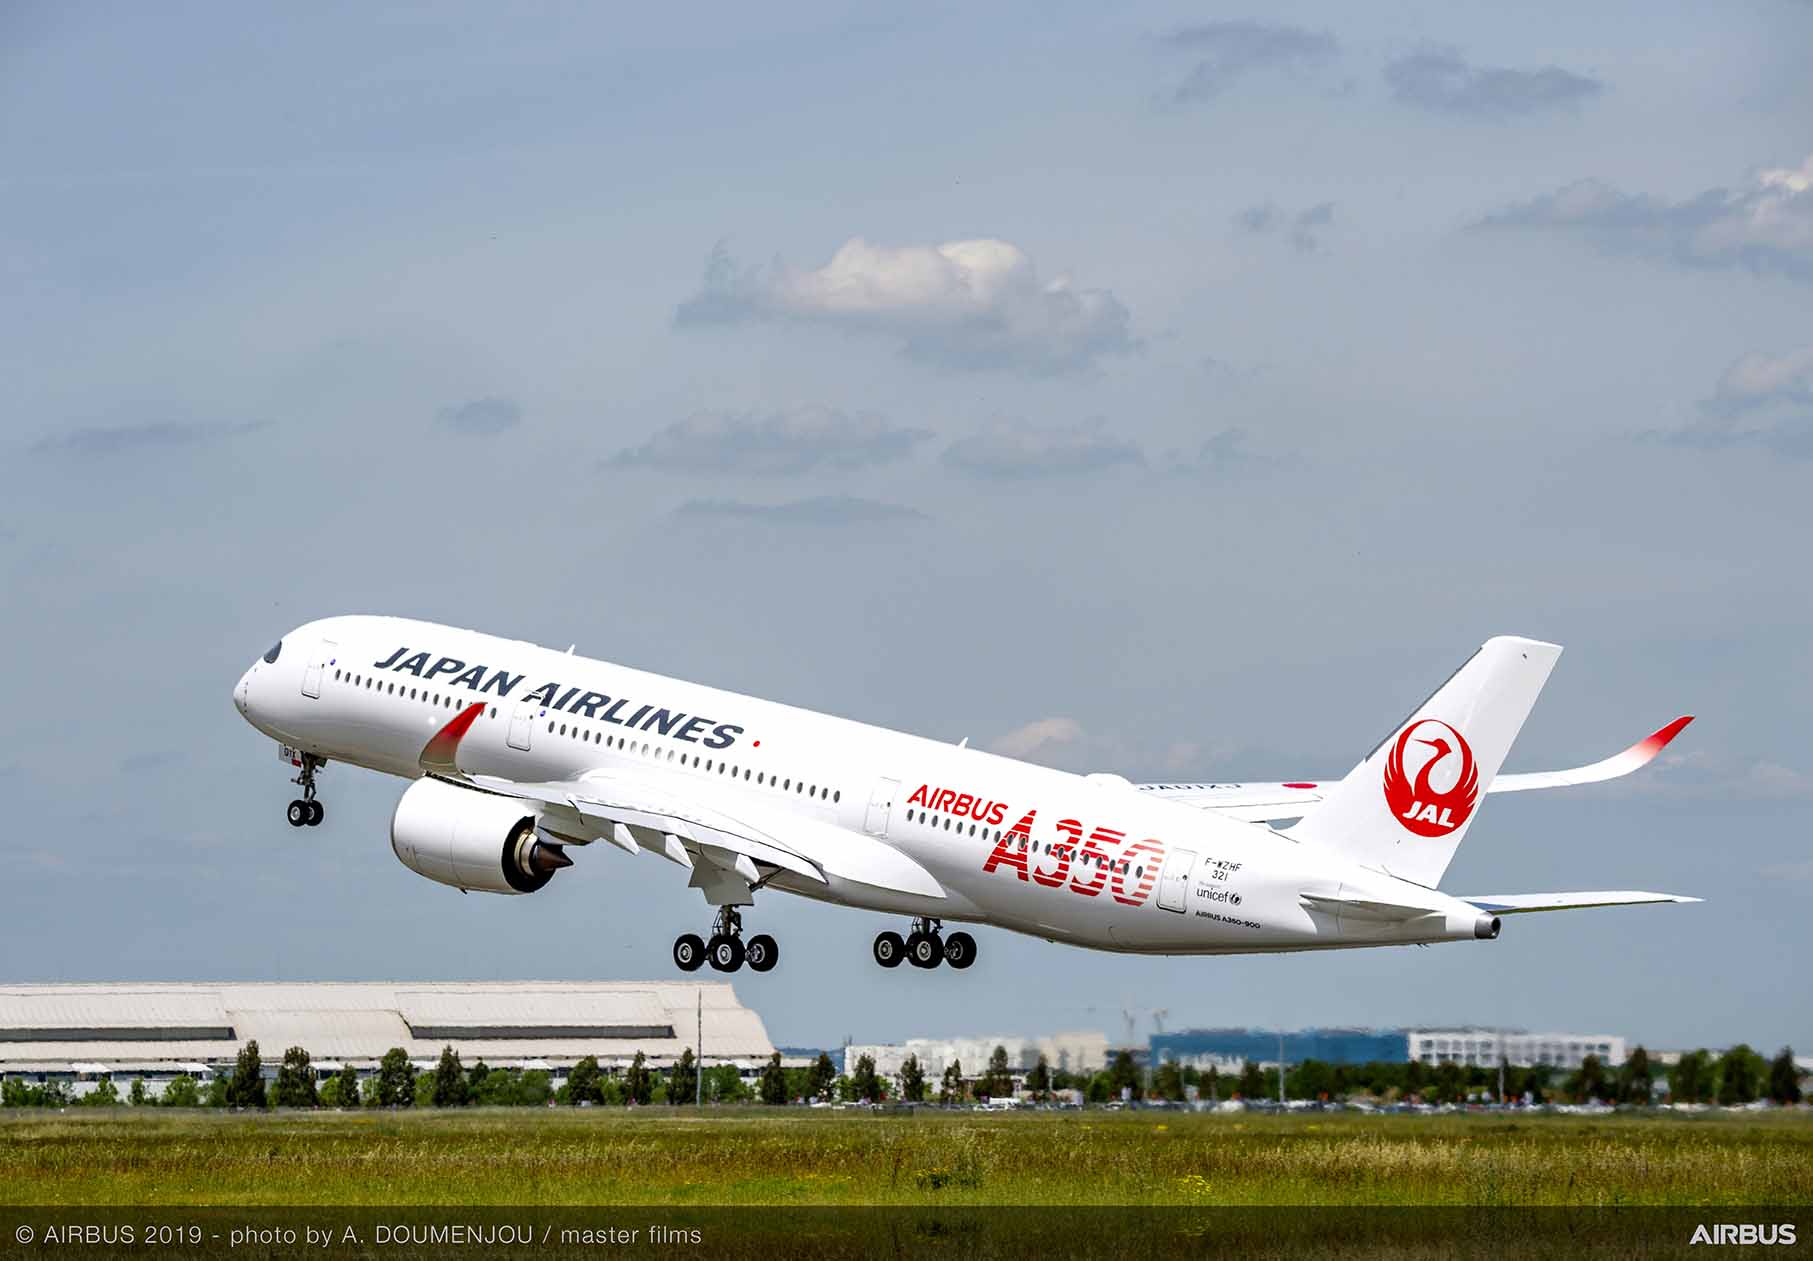 JAL, Peach Aviation increase Thailand capacity